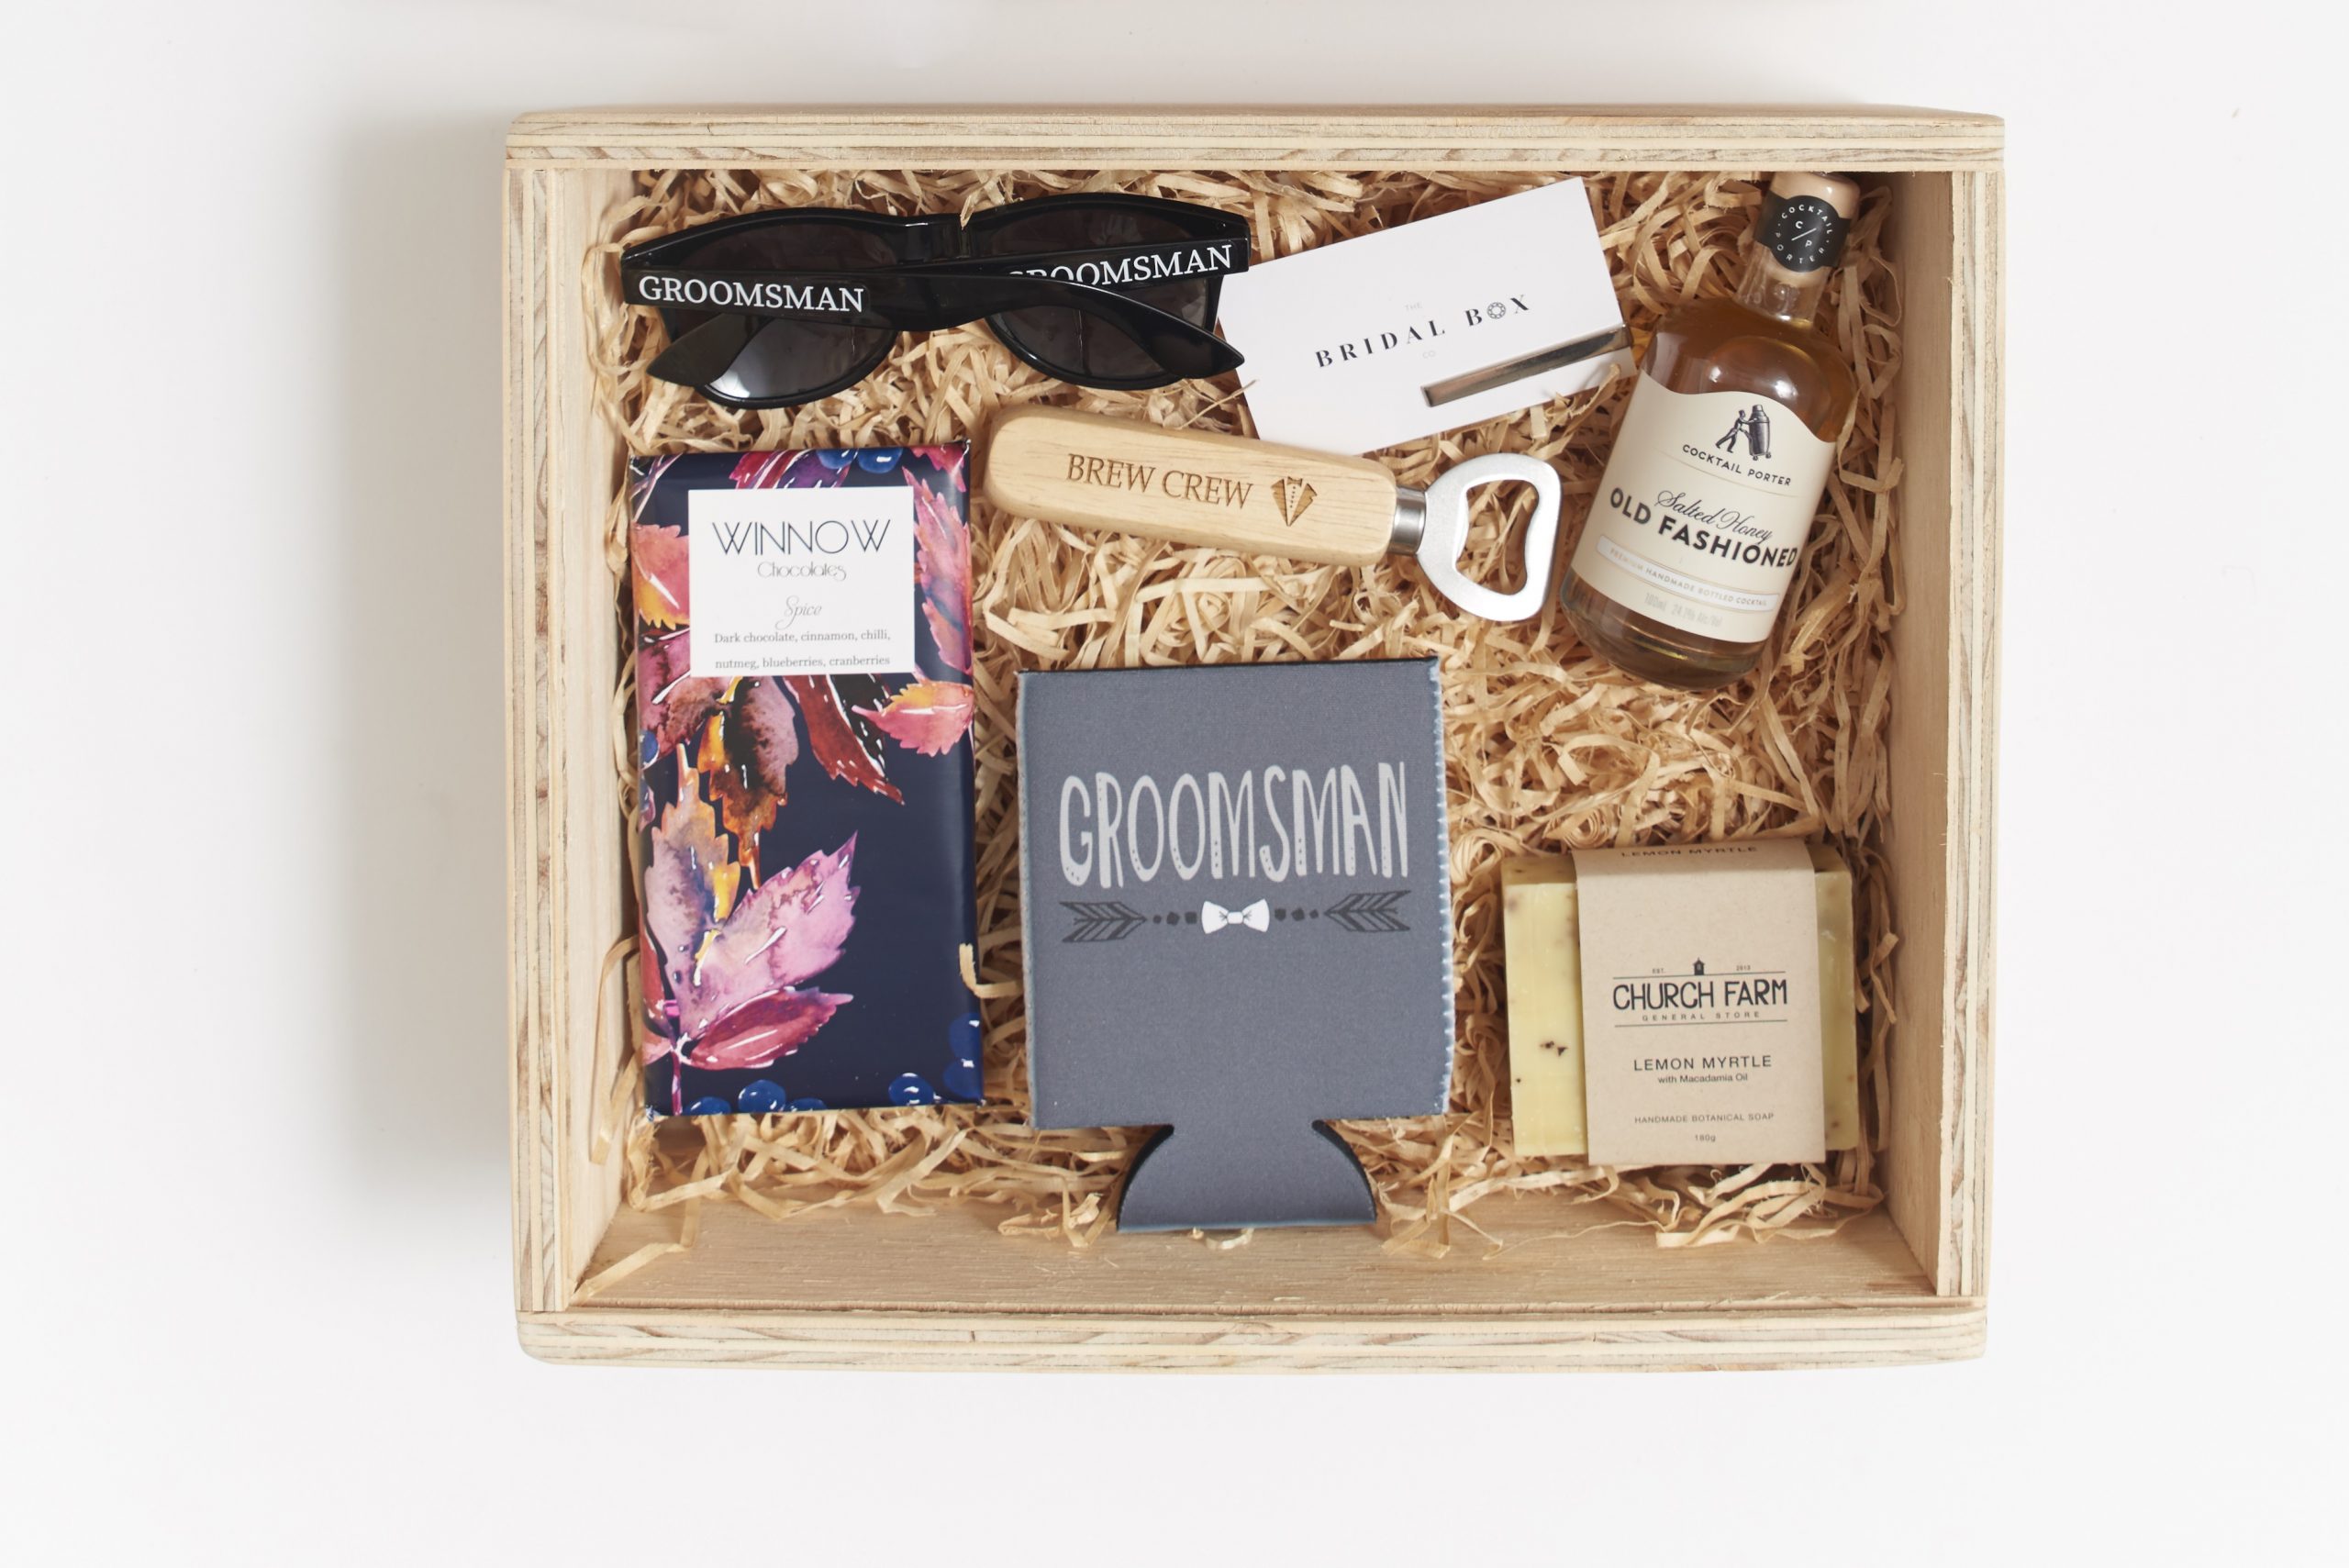 Groomsman keepsake gift box hamper inclusions